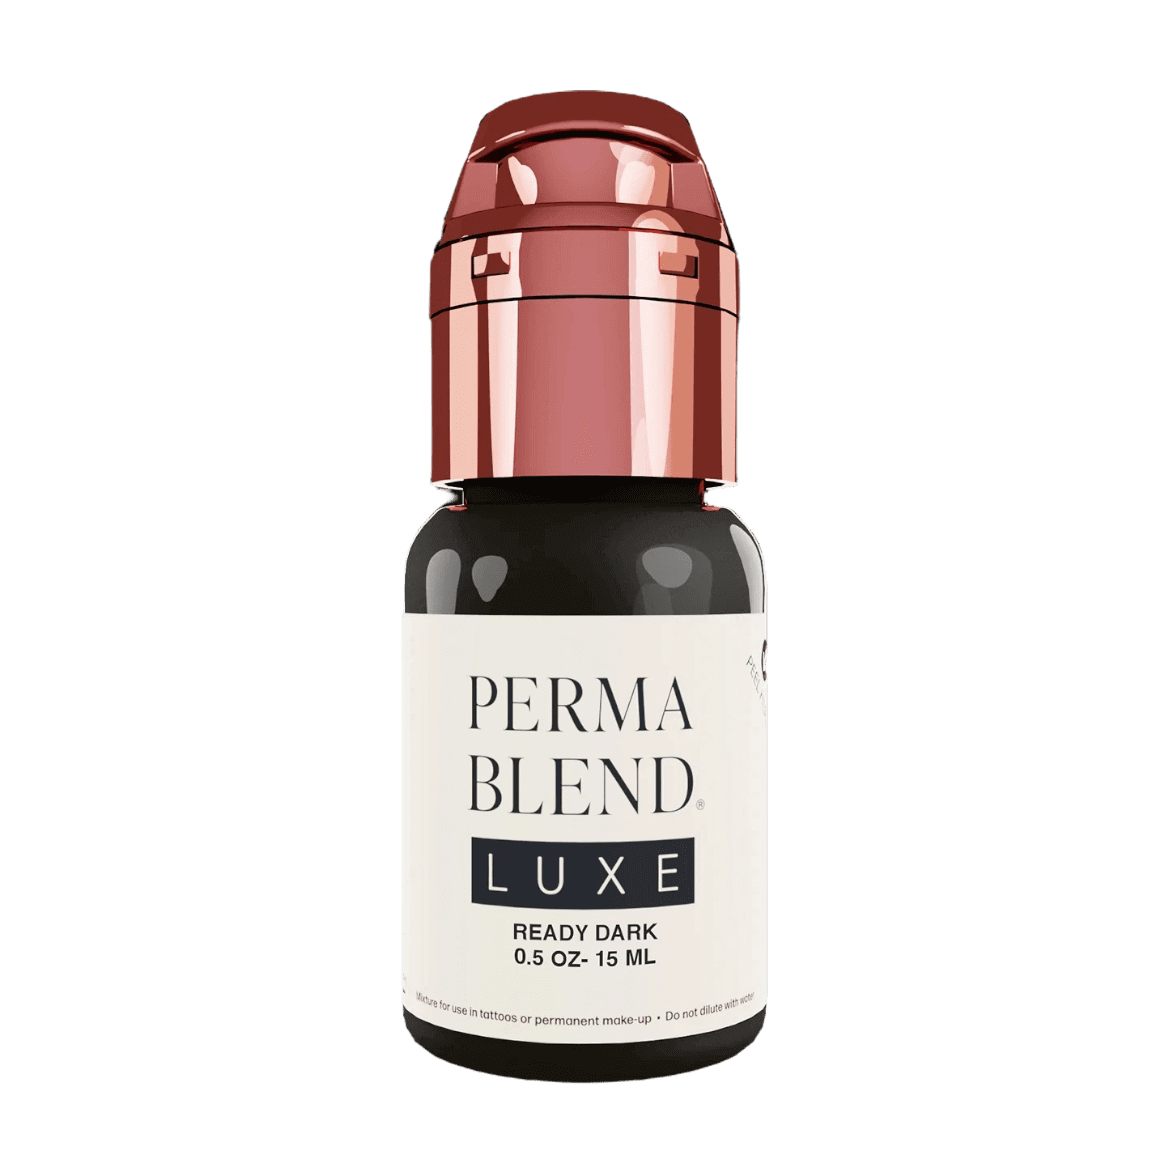 Perma Blend Luxe Ready Dark